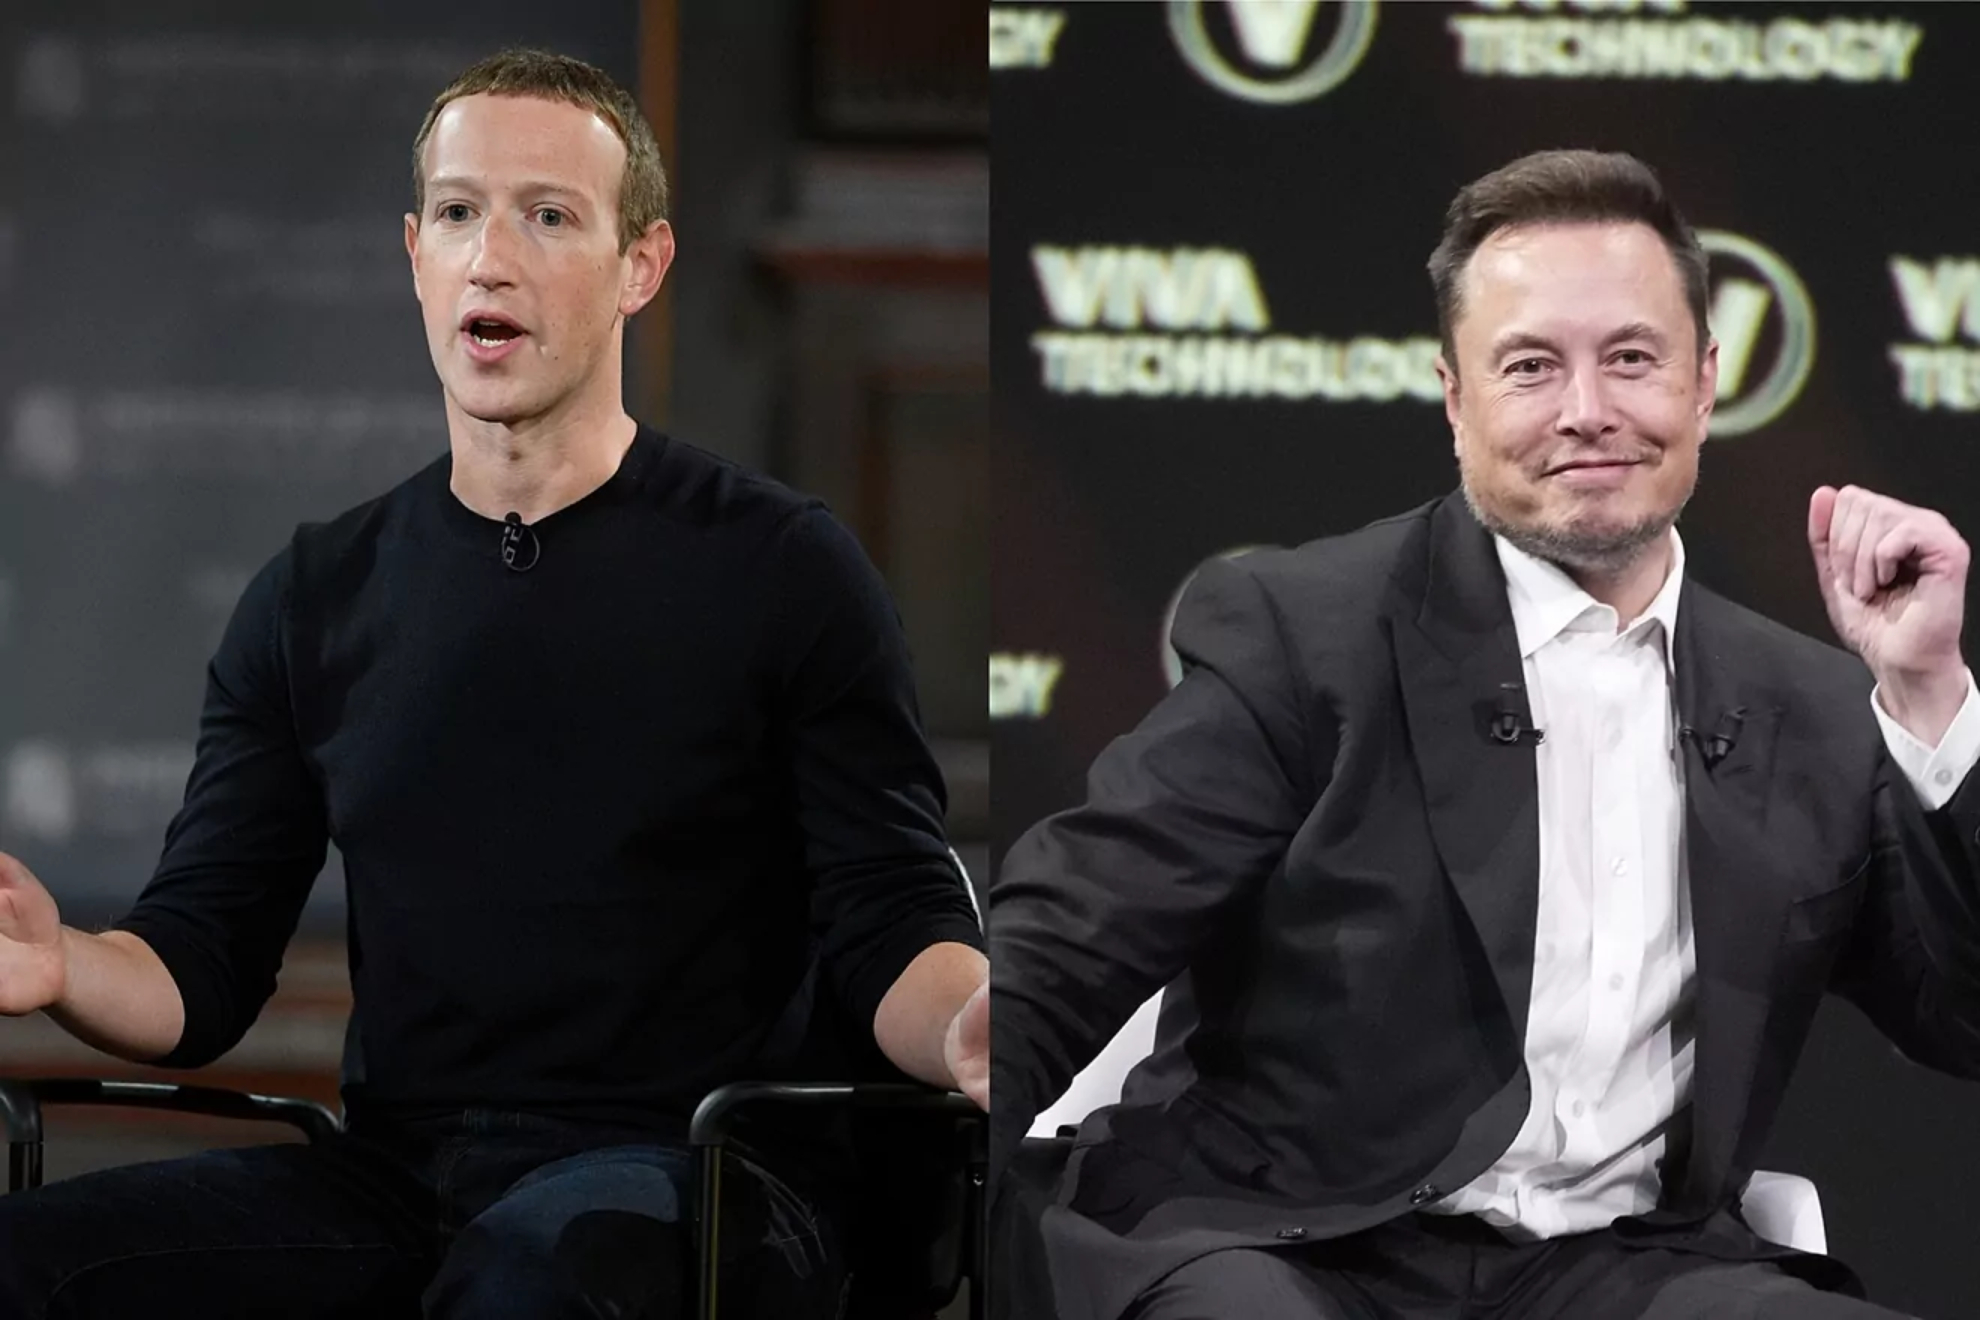 Mashup image of Mark Zuckerberg vs Elon Musk